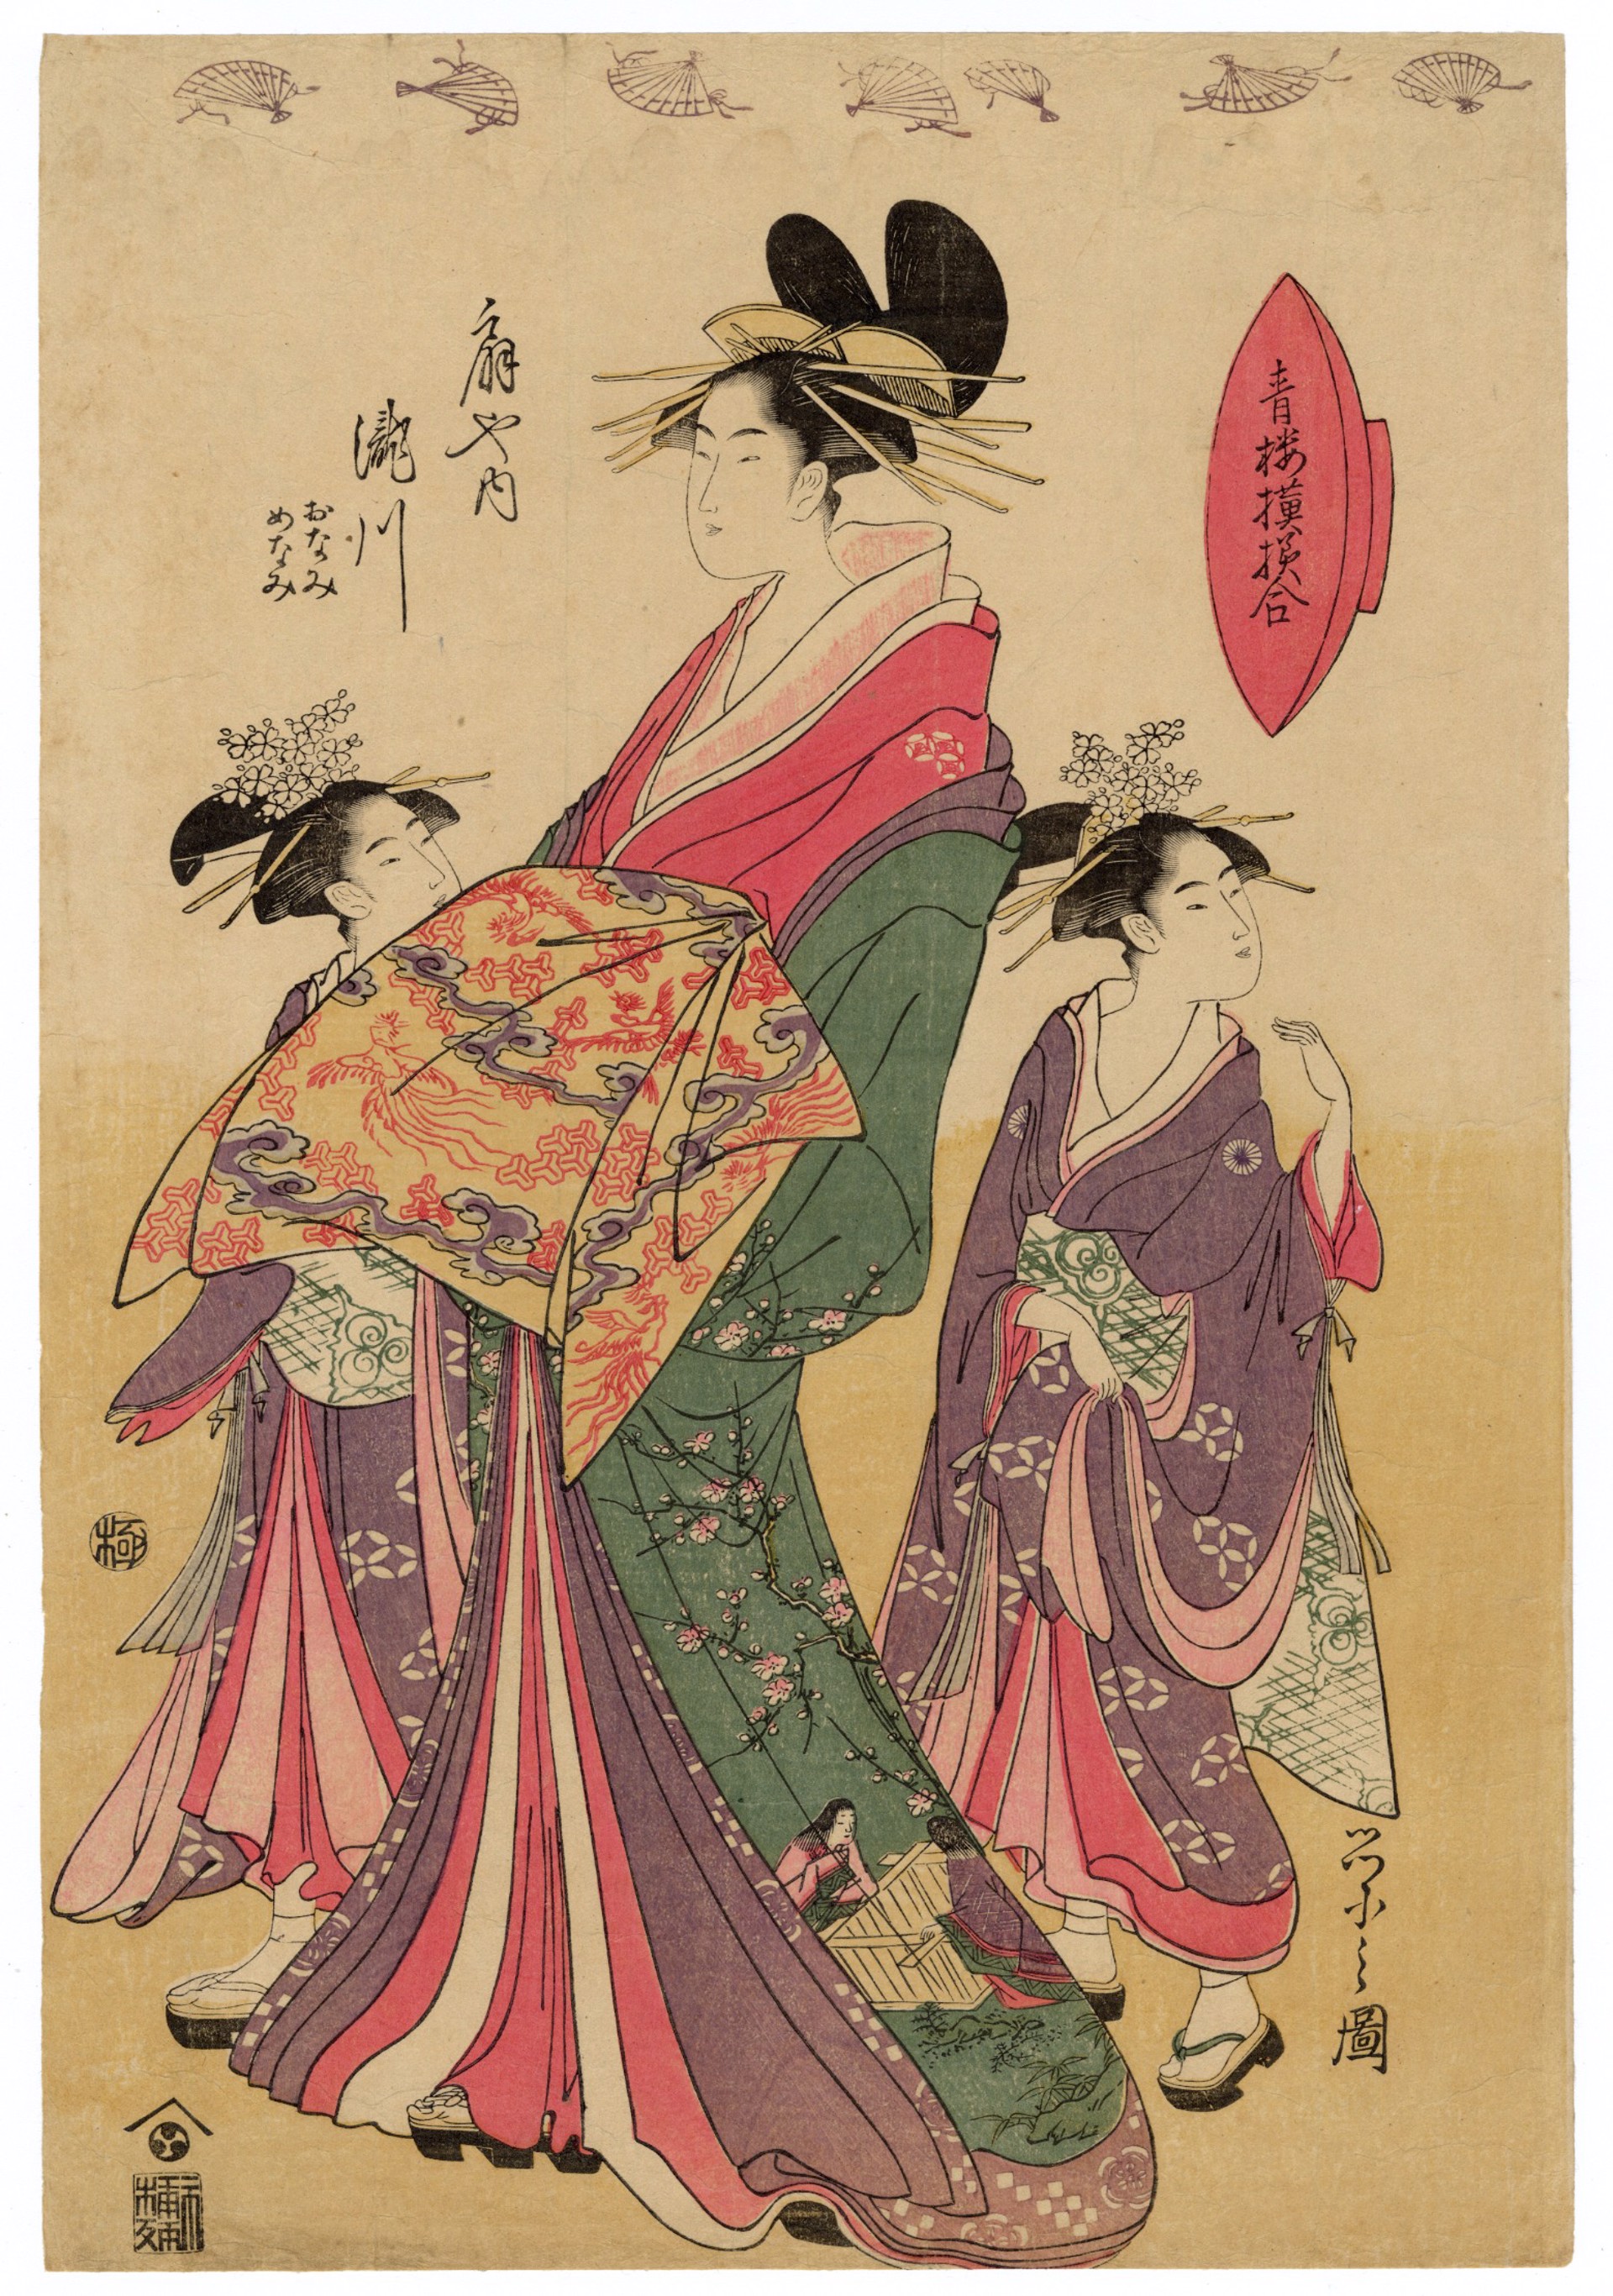 Takigawa of the Ogi-ya by Eishi